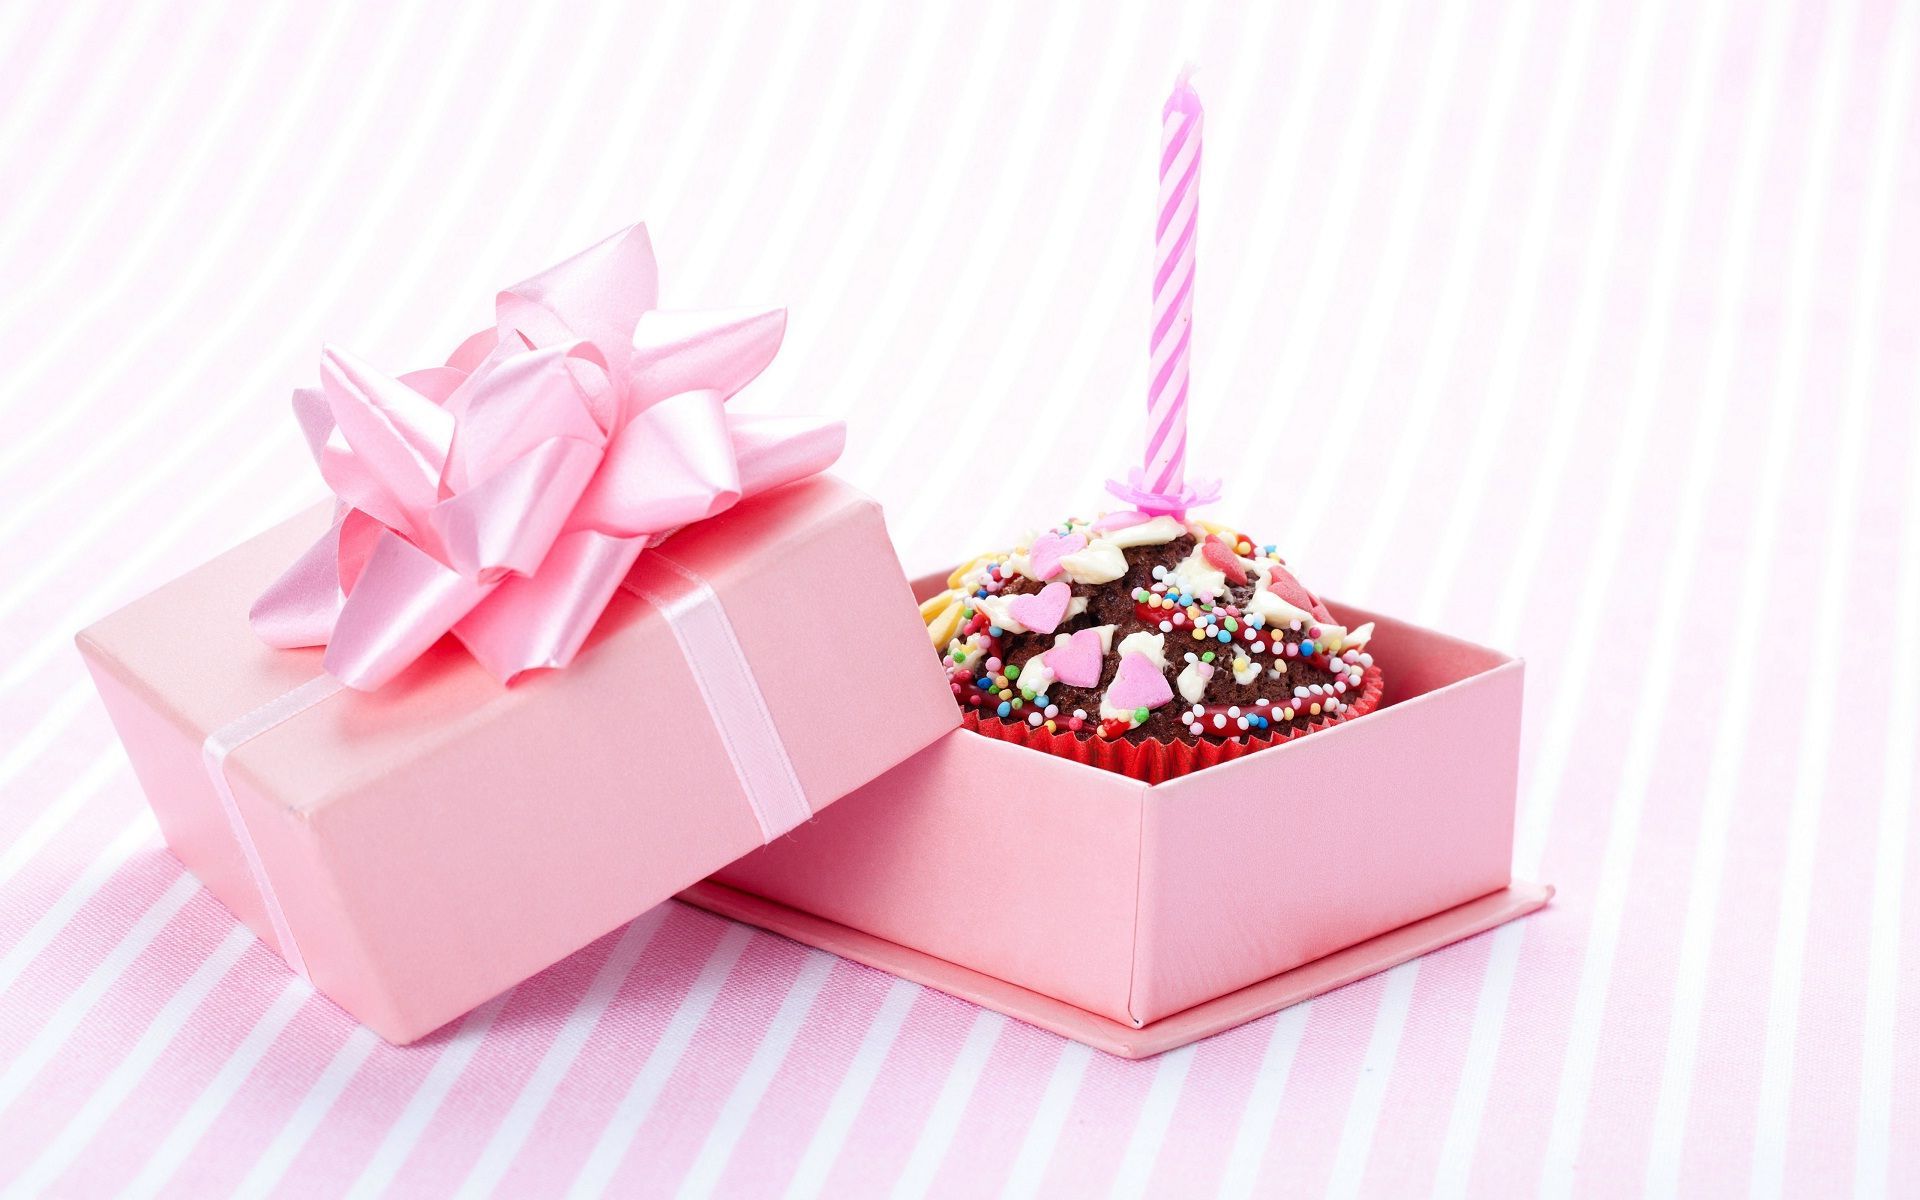 Happy Birthday cake in pink gift box .com